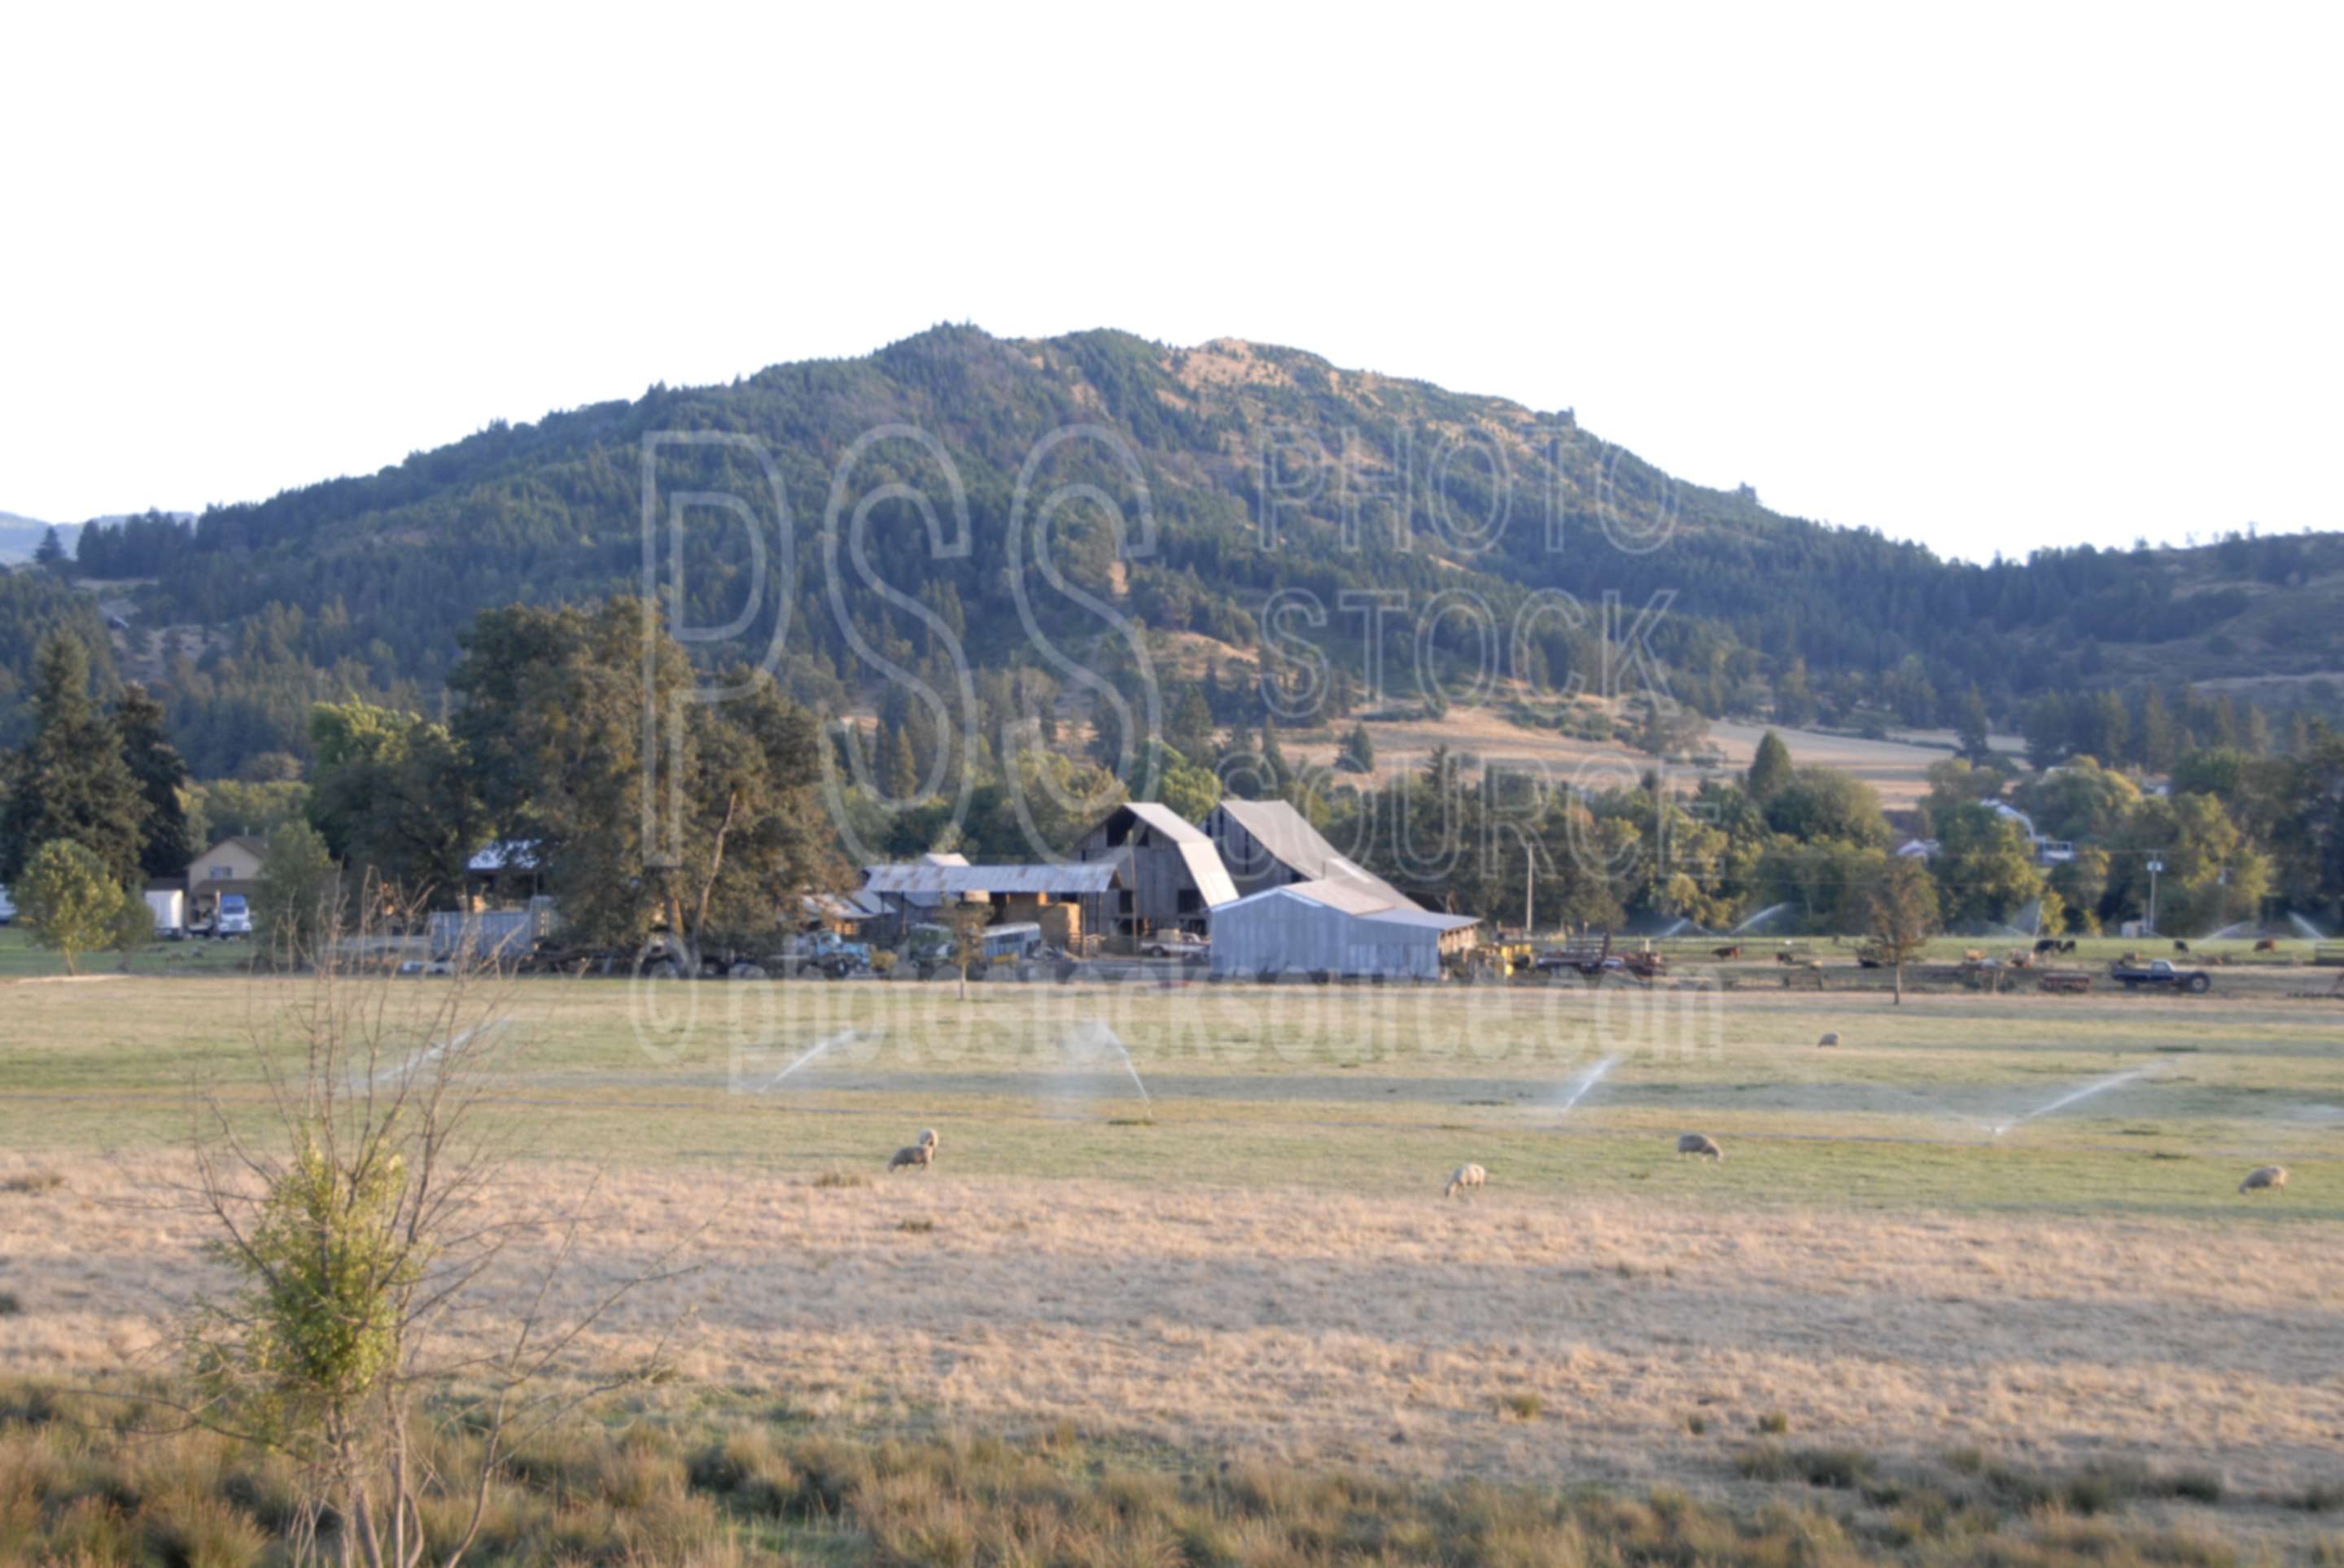 Umpqua Valley Barn,sheep,umpqua,hills,rolling hills,barn,barns,farms